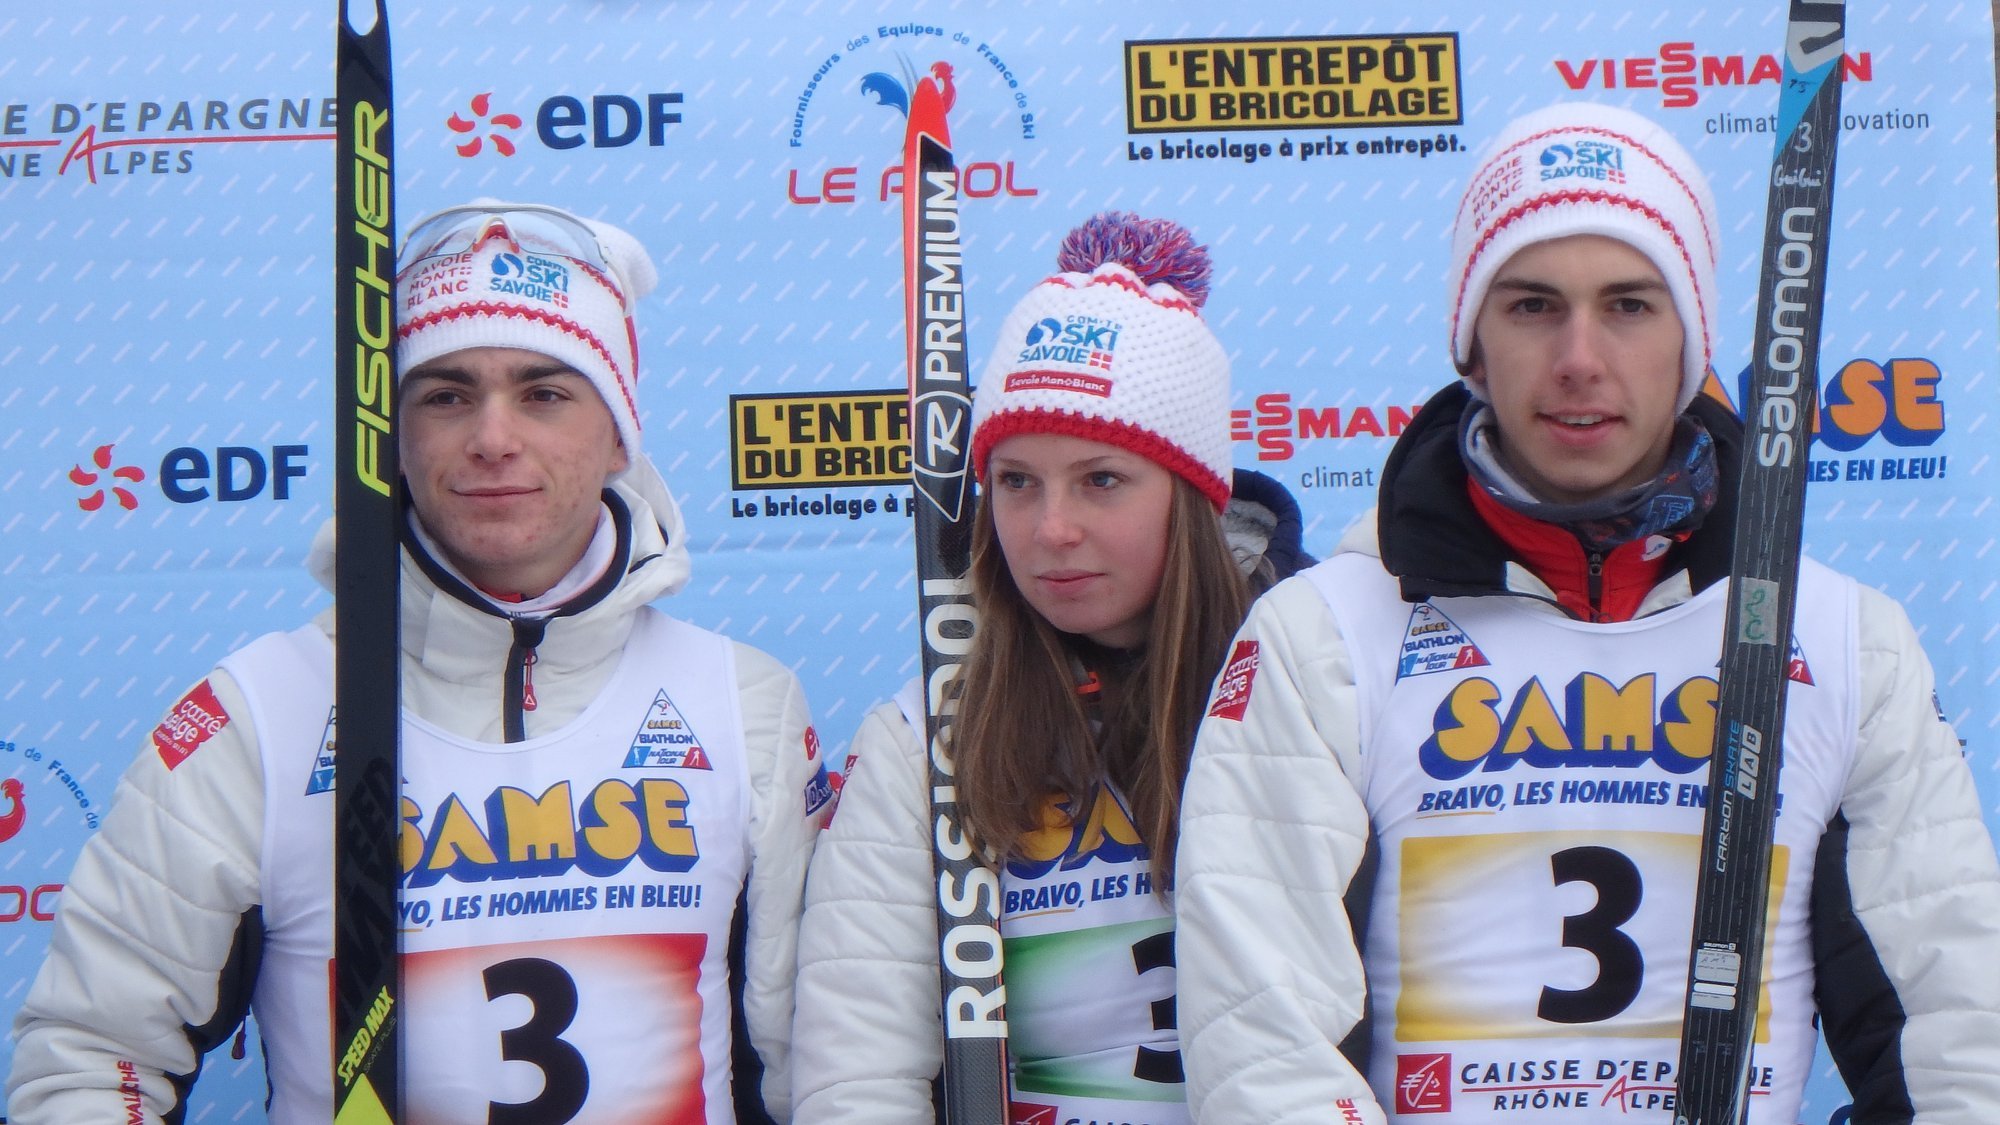 Biathlon, Samse national tour, La Seigne, hiver, sport